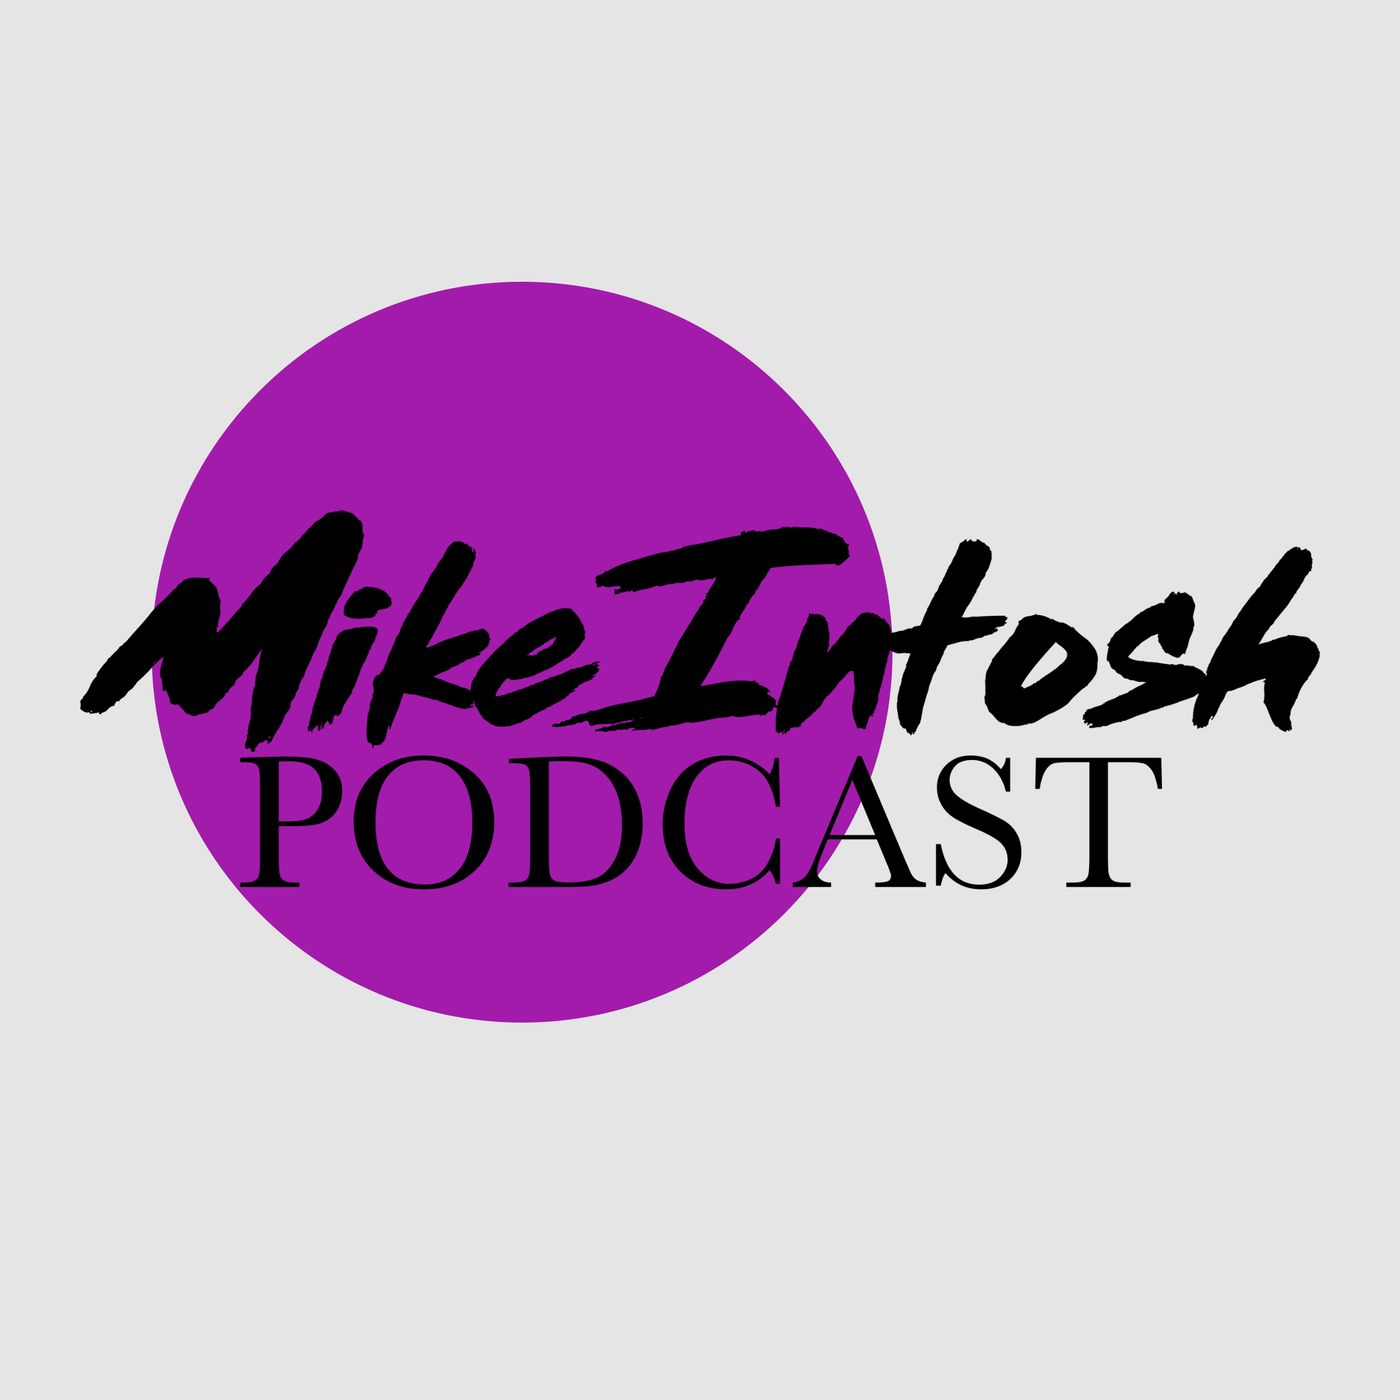 Mikeintosh Podcast